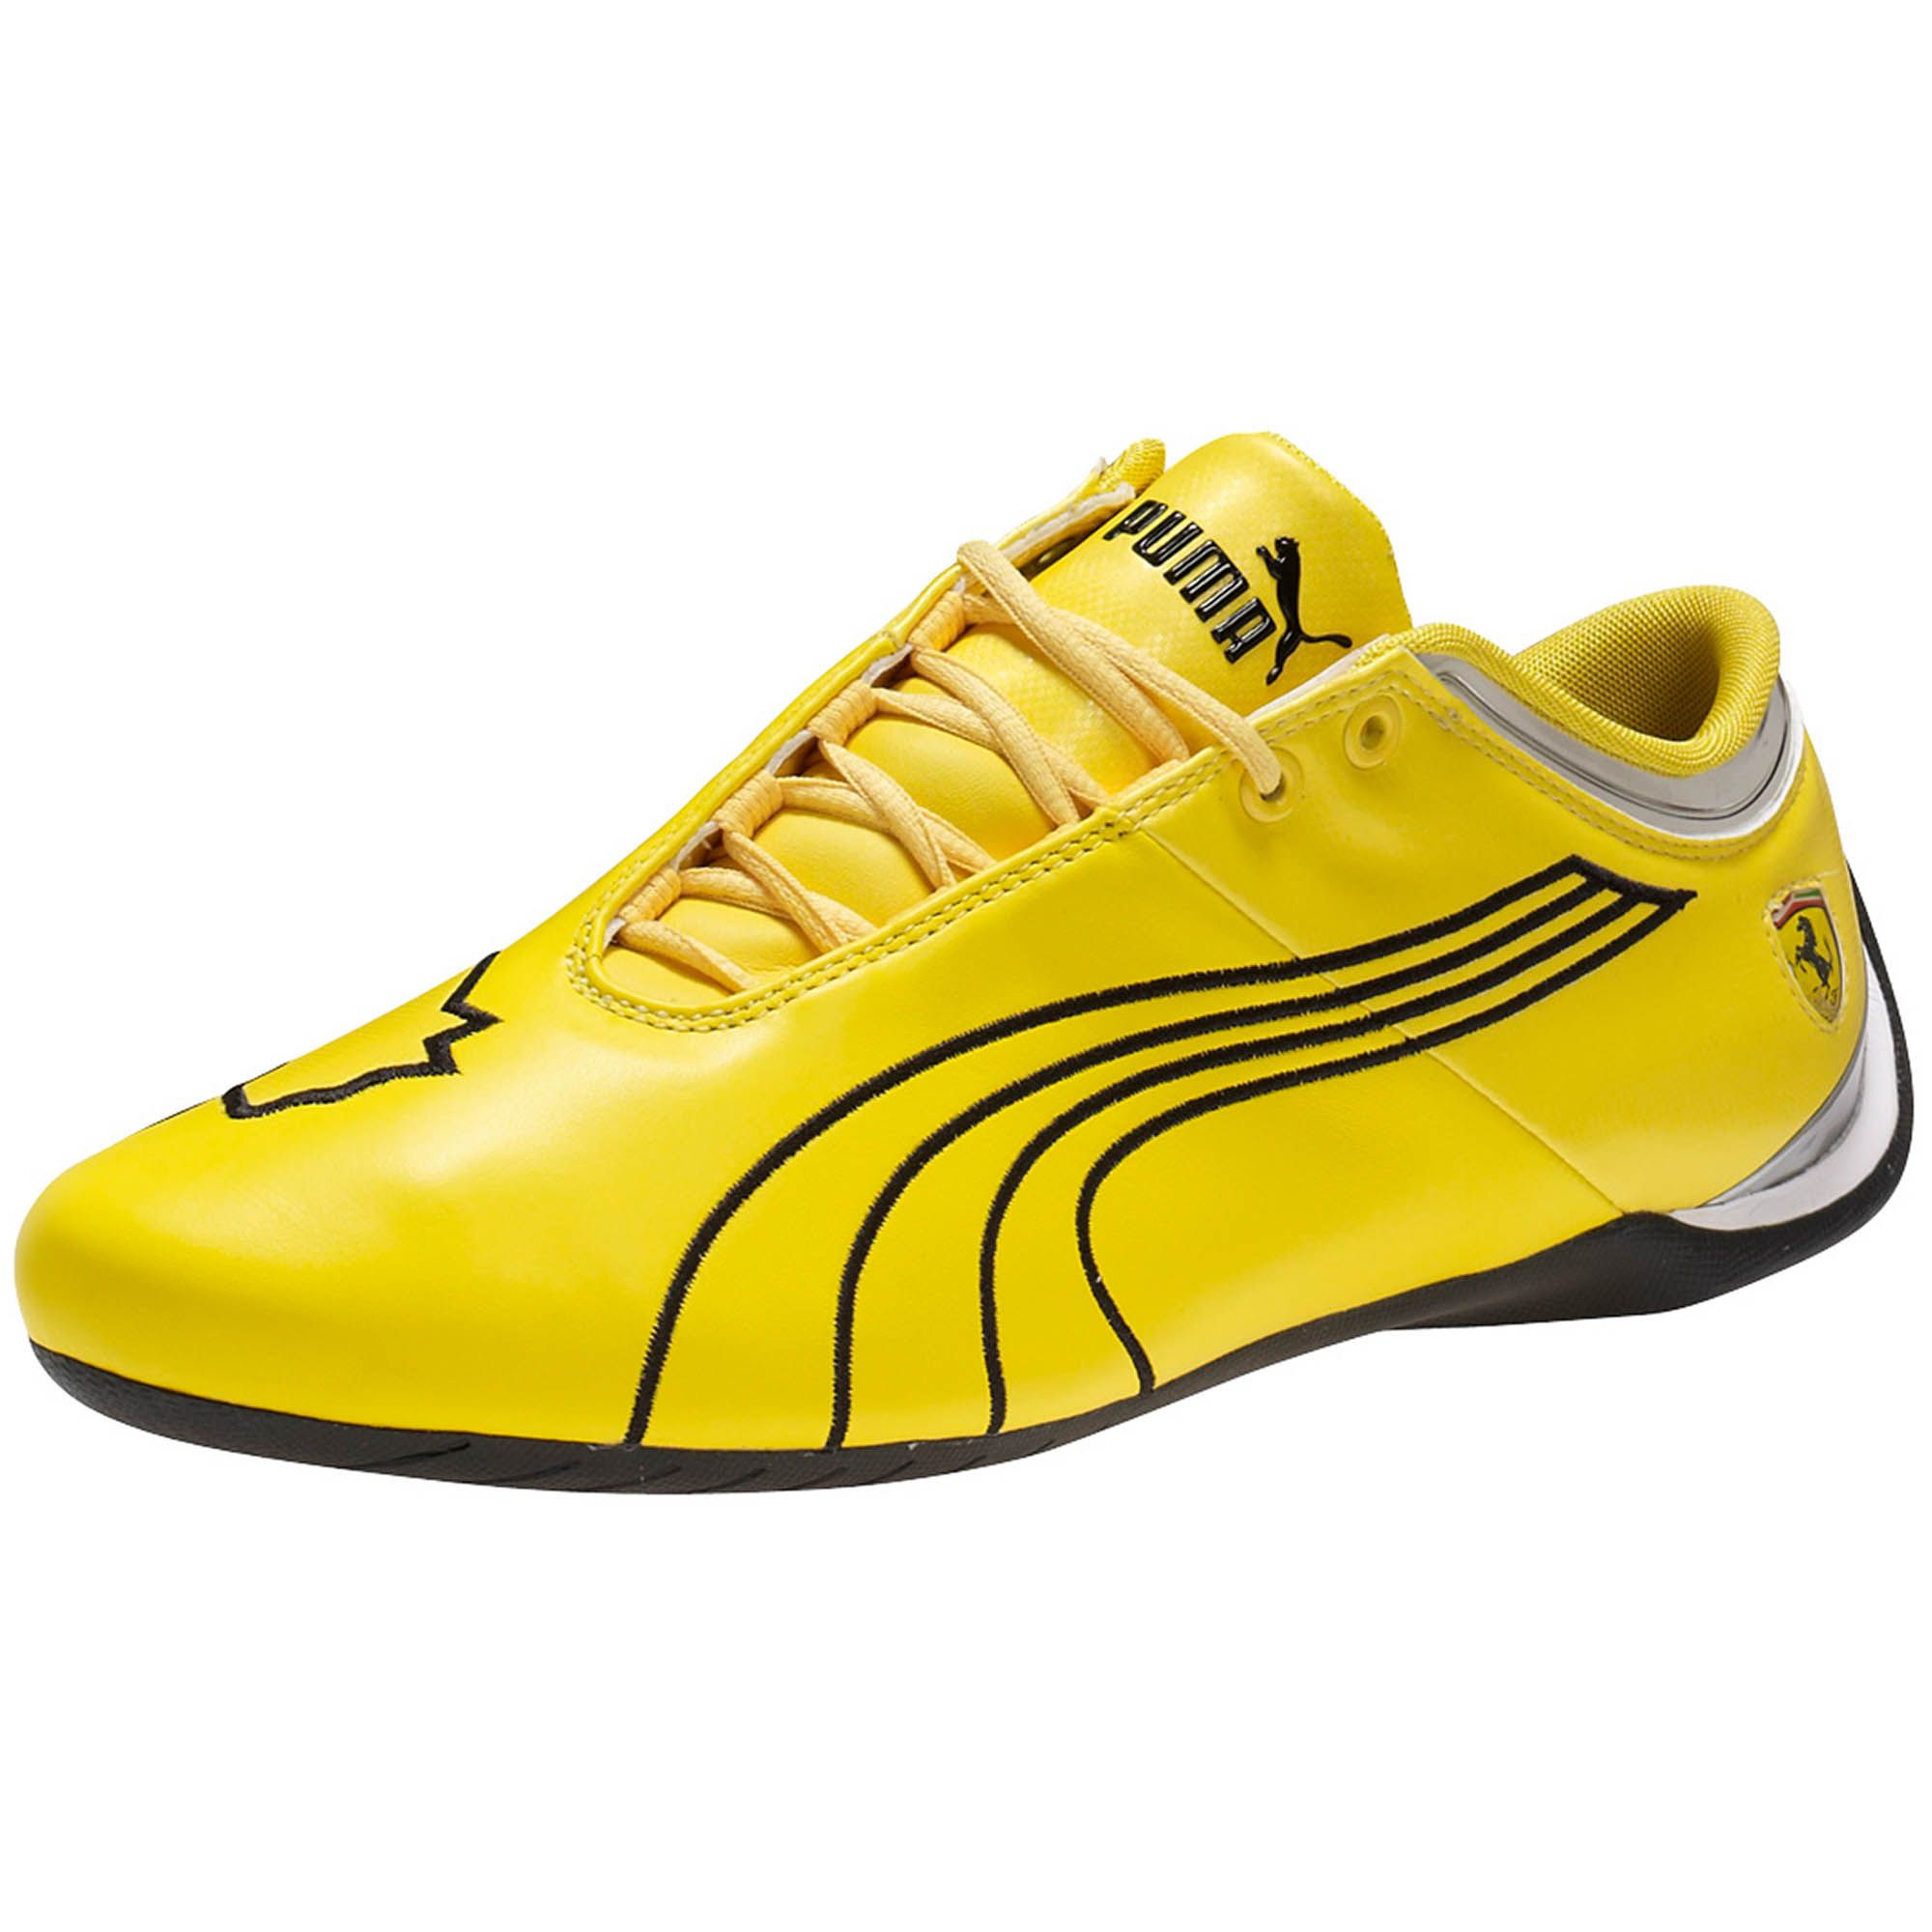 puma ferrari shoes yellow